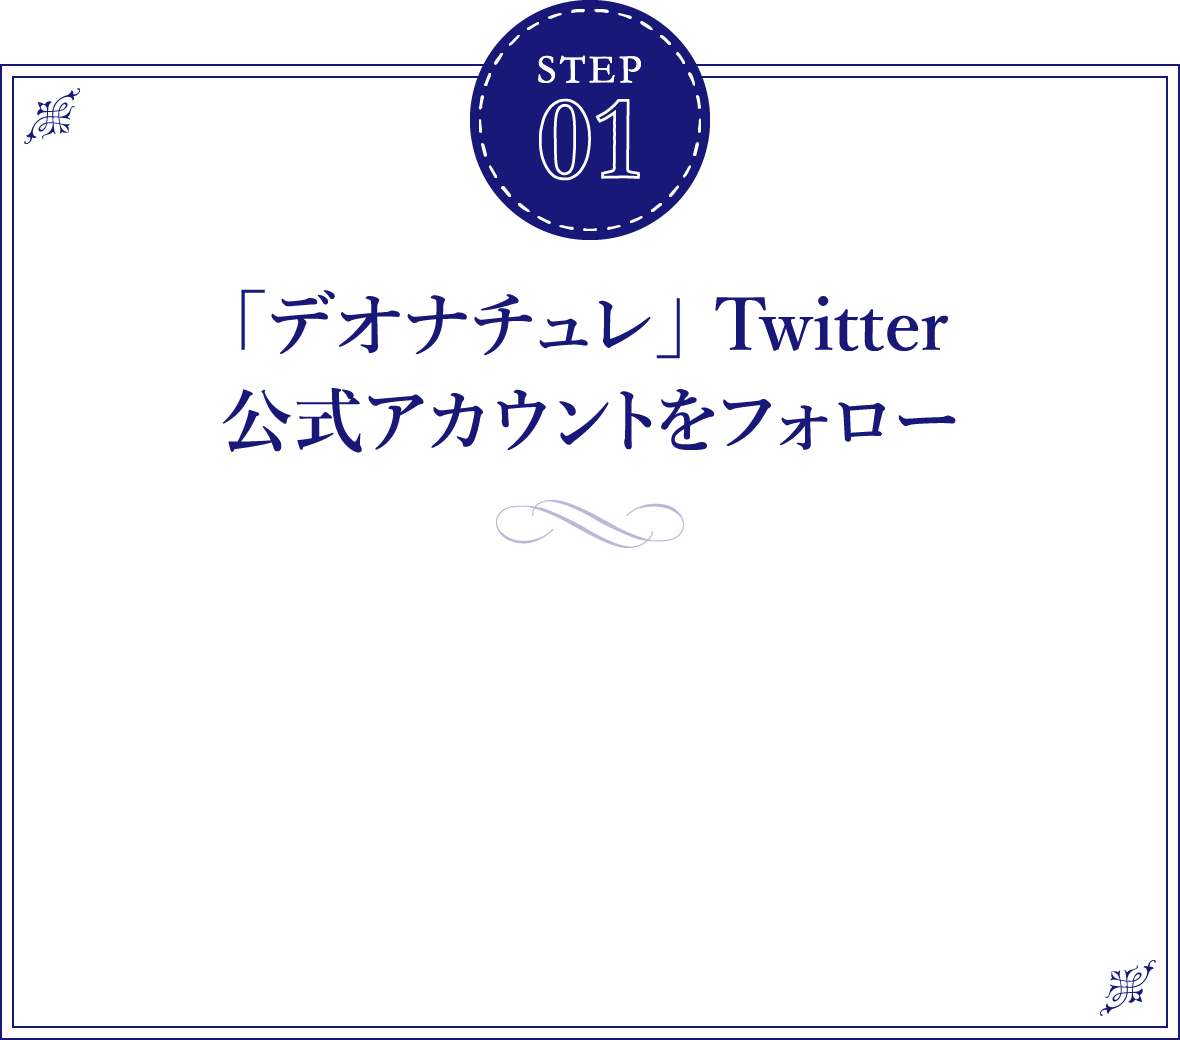 【STEP01】「デオナチュレ」 Twitter公式アカウントをフォロー